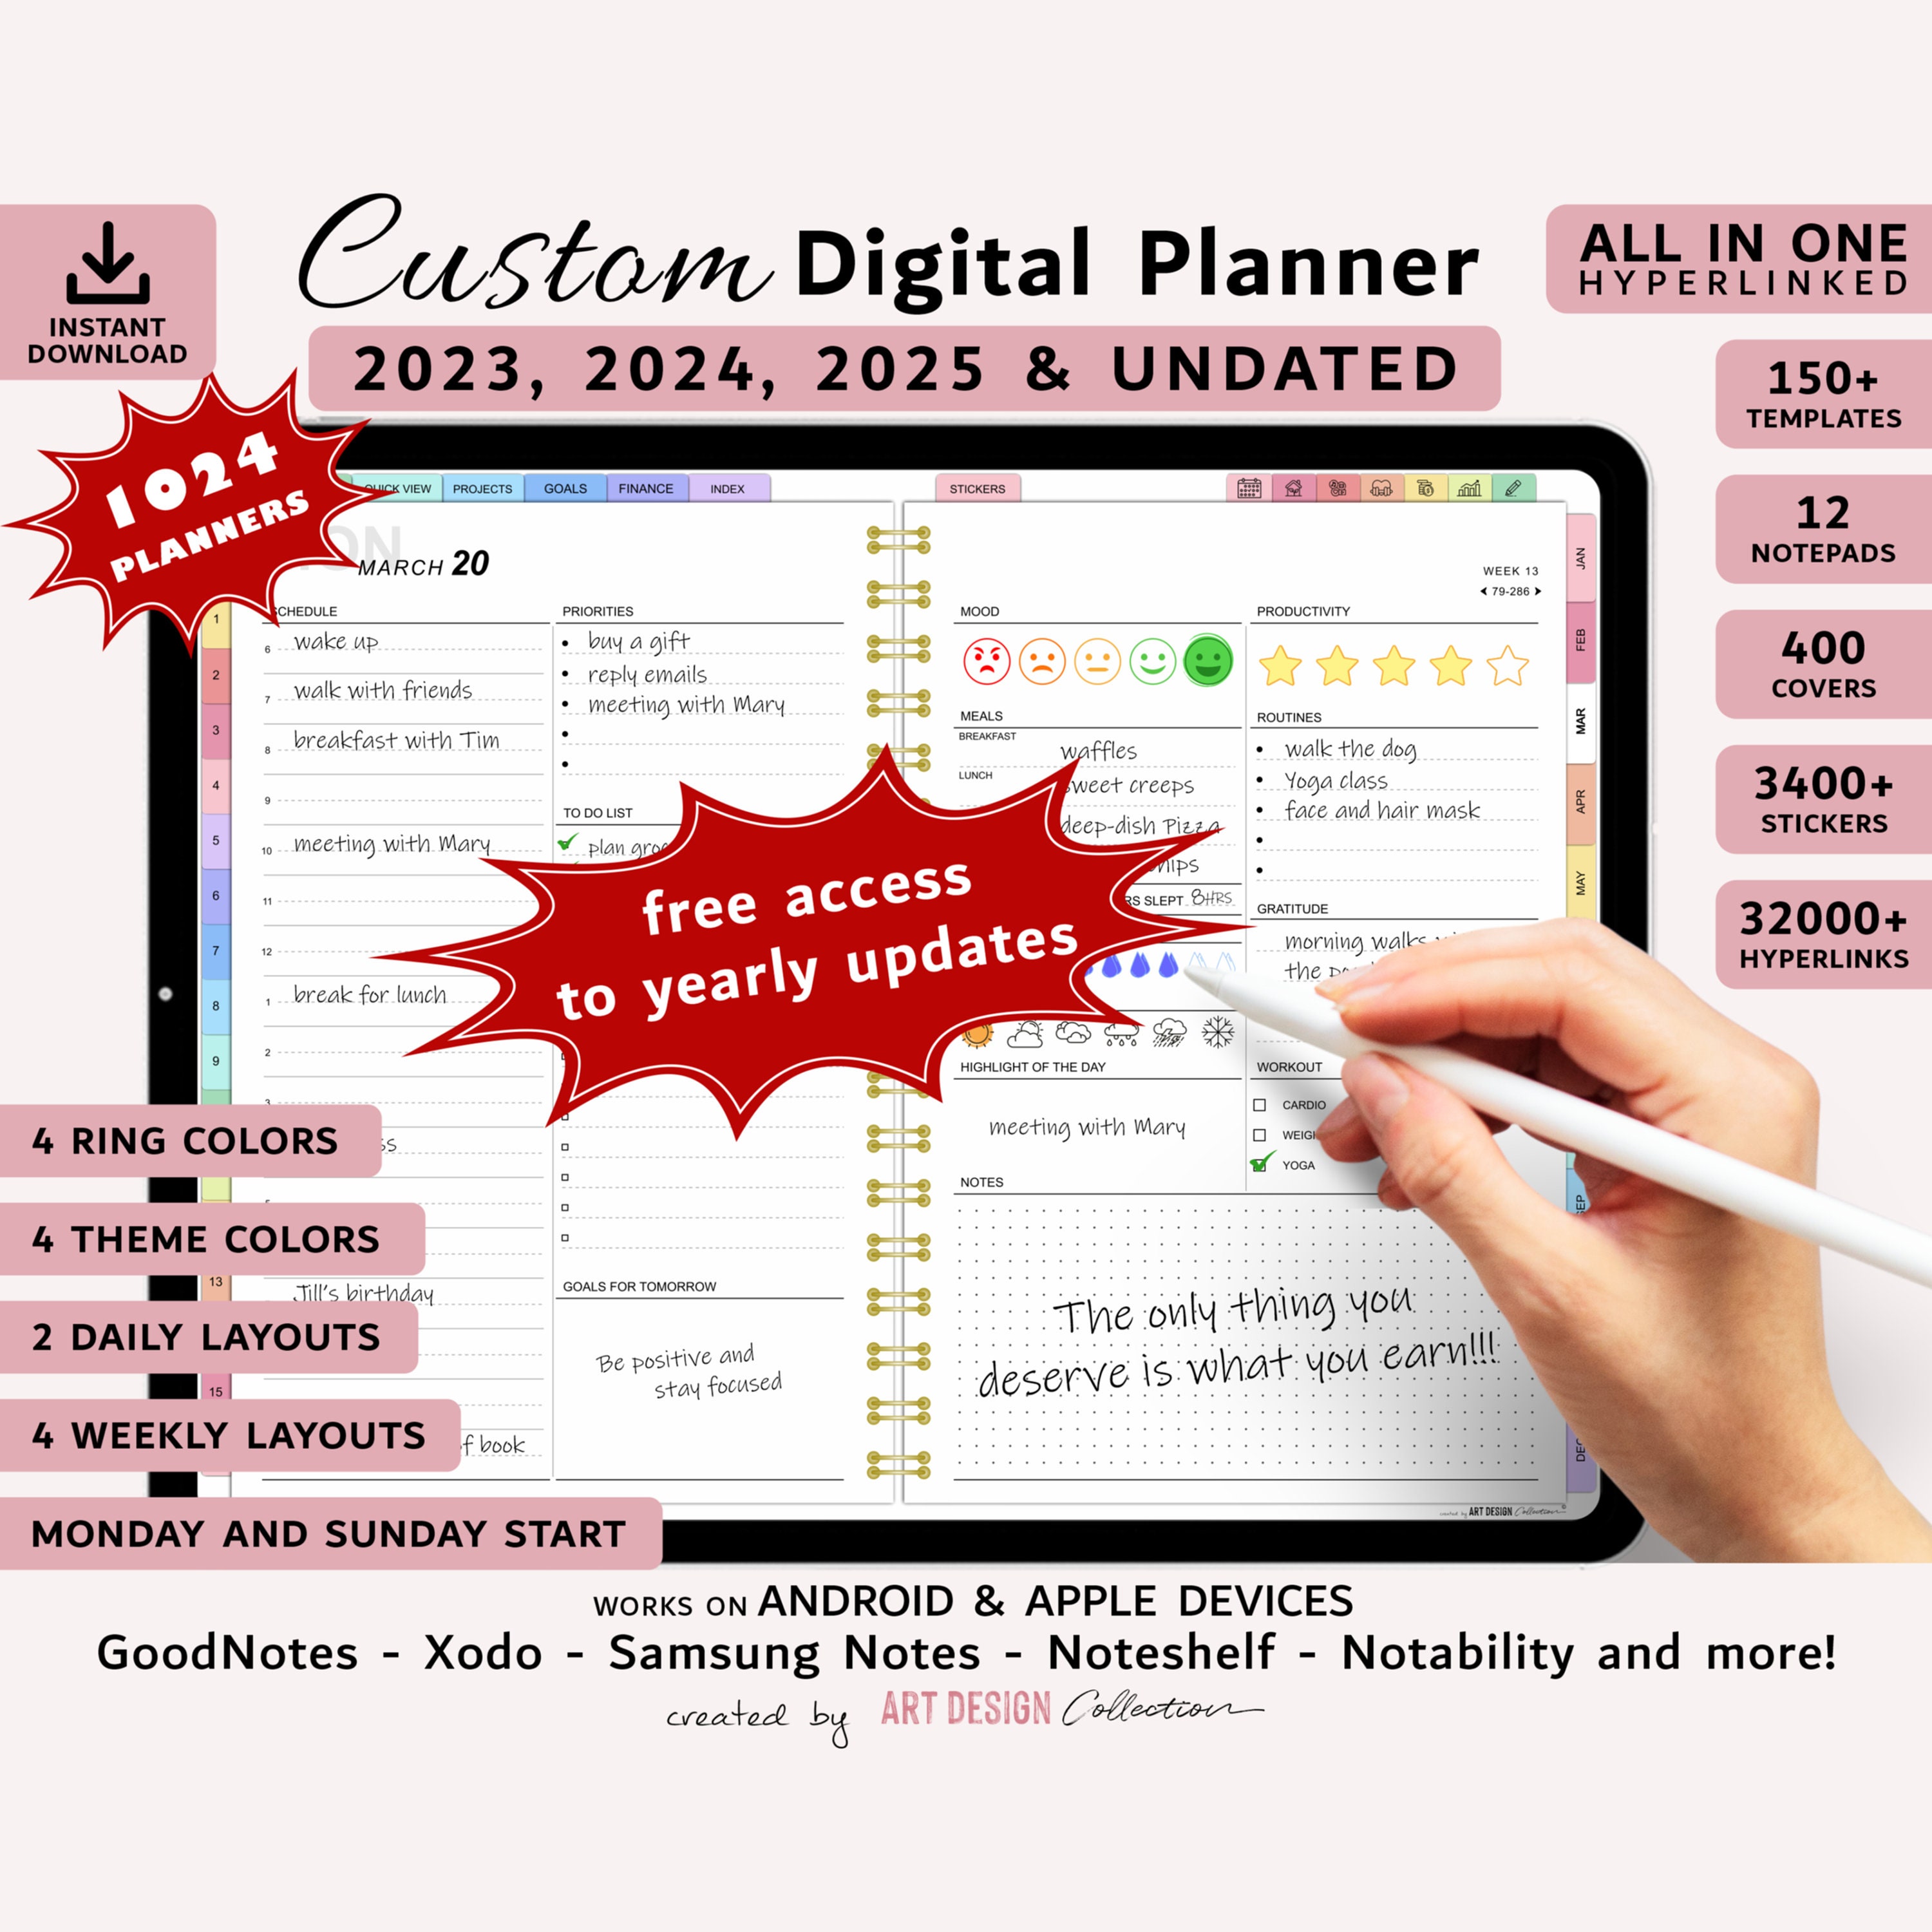 La mejor Agenda digital 2024, Planifesting